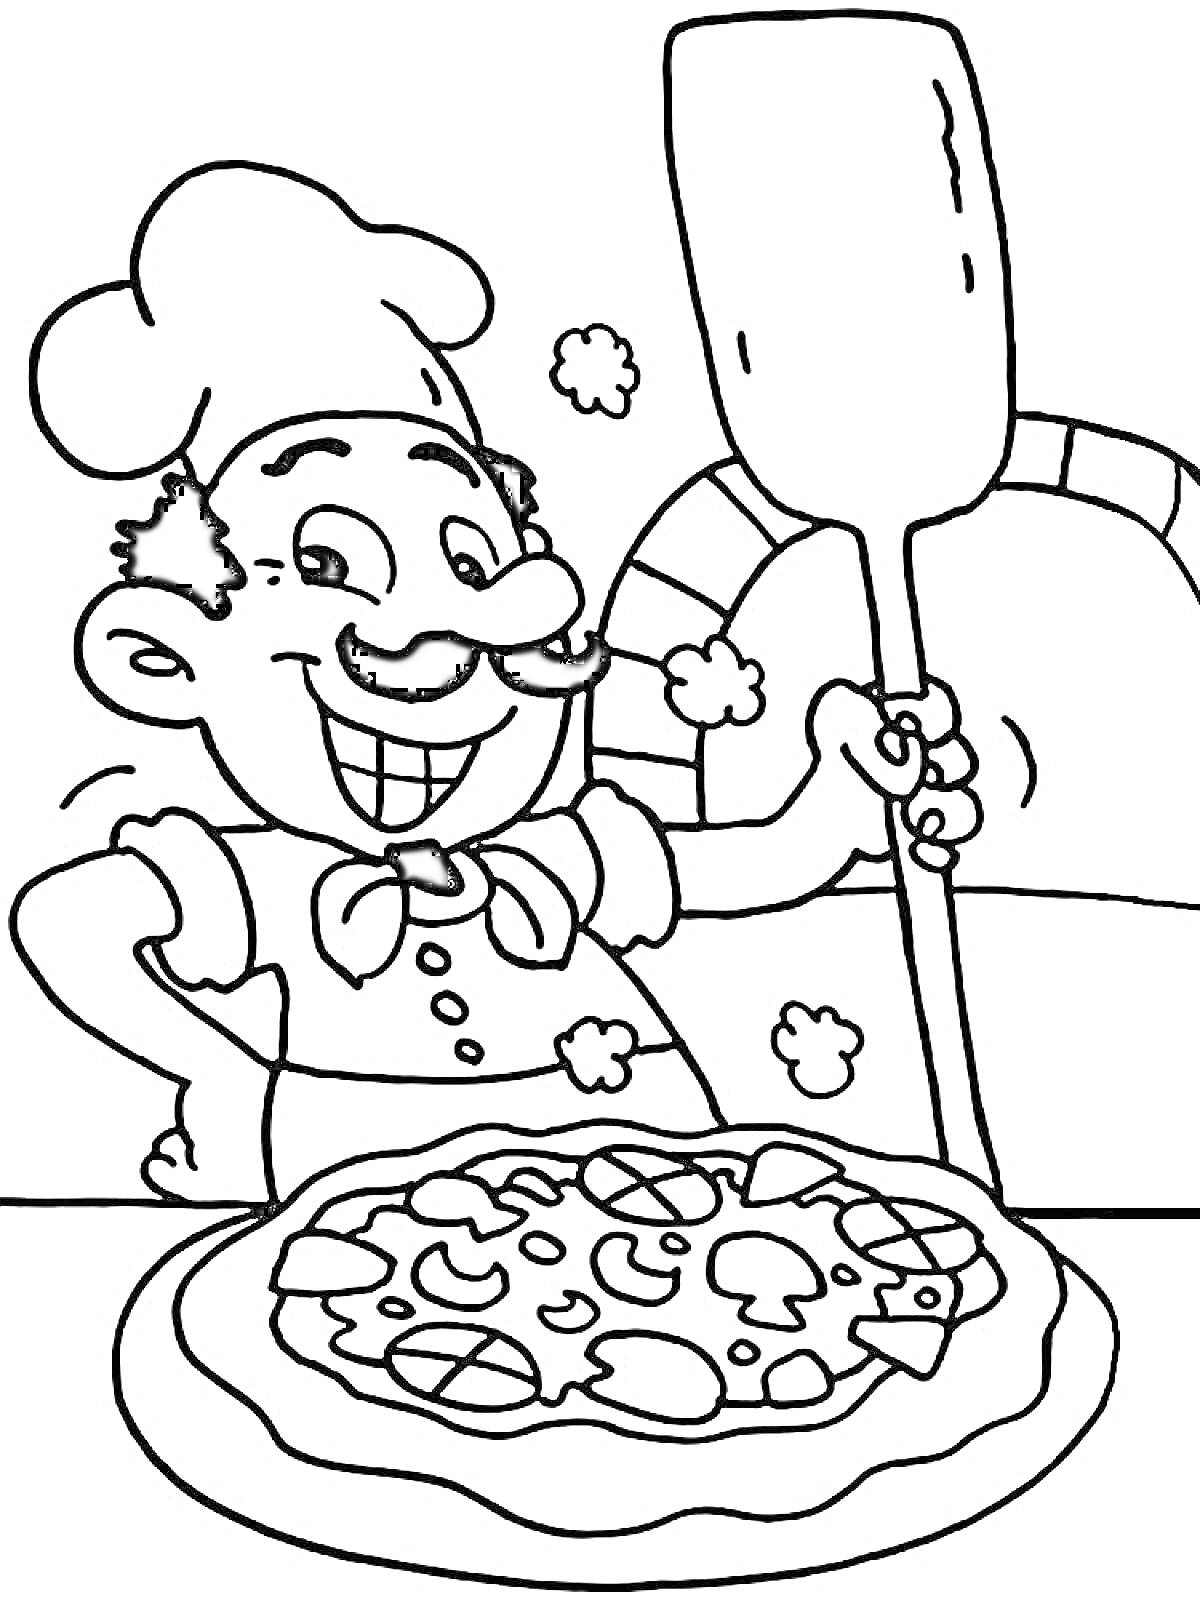 На раскраске изображено: Повар, Пицца, Еда, Улыбка, Готовка, Кухня, Рисование для детей, Печка